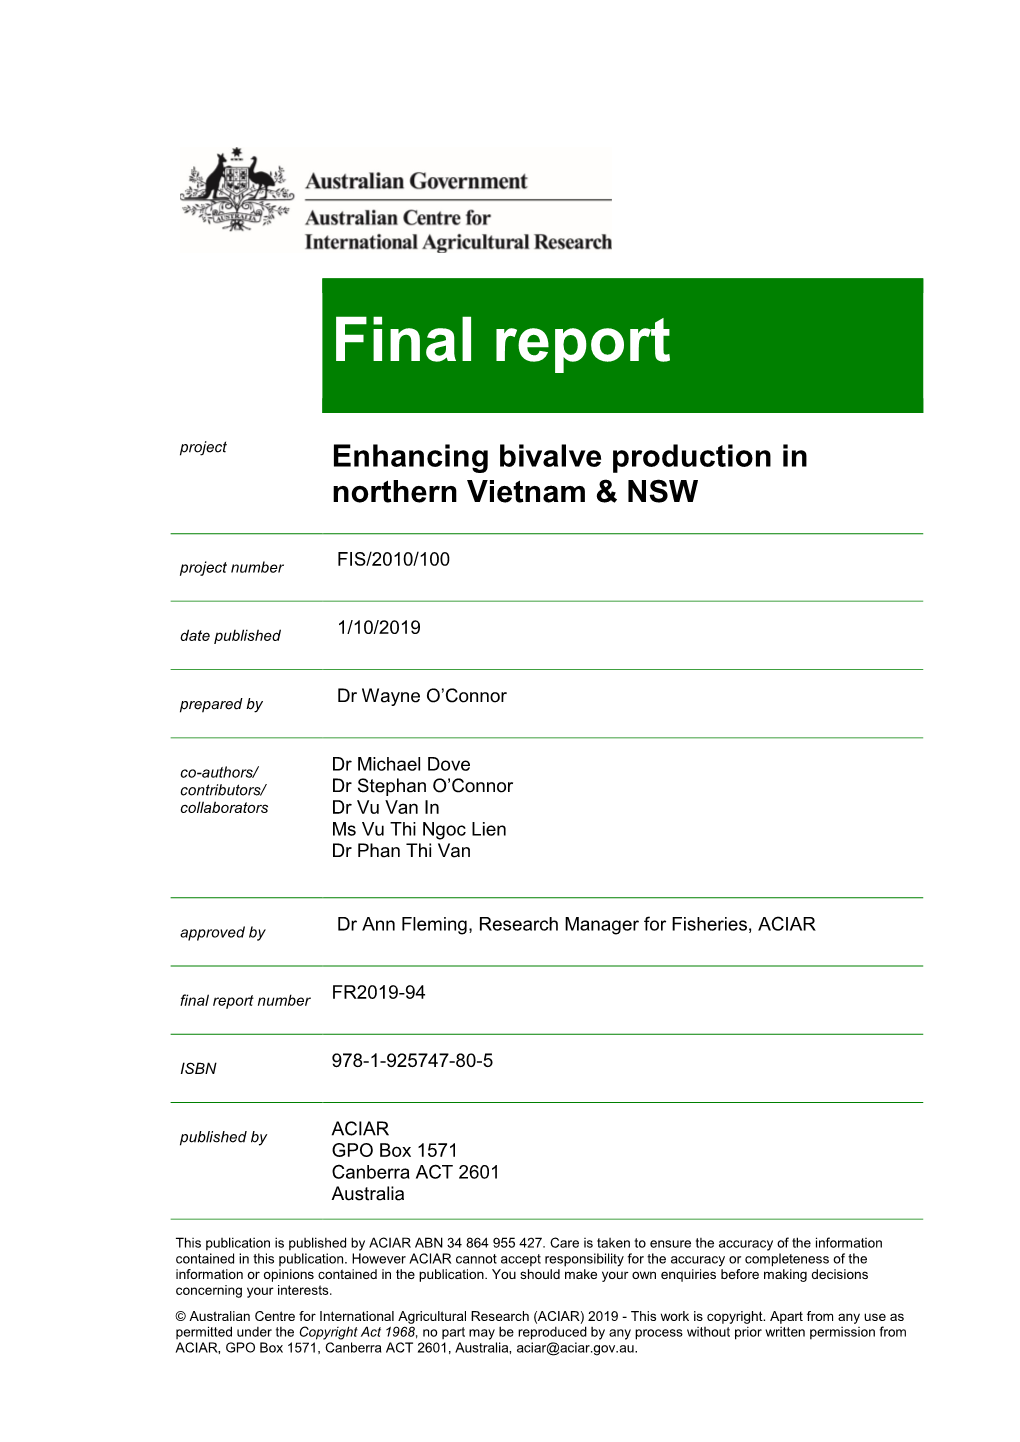 Final Report FIS/​2010/​100 2.88 MB